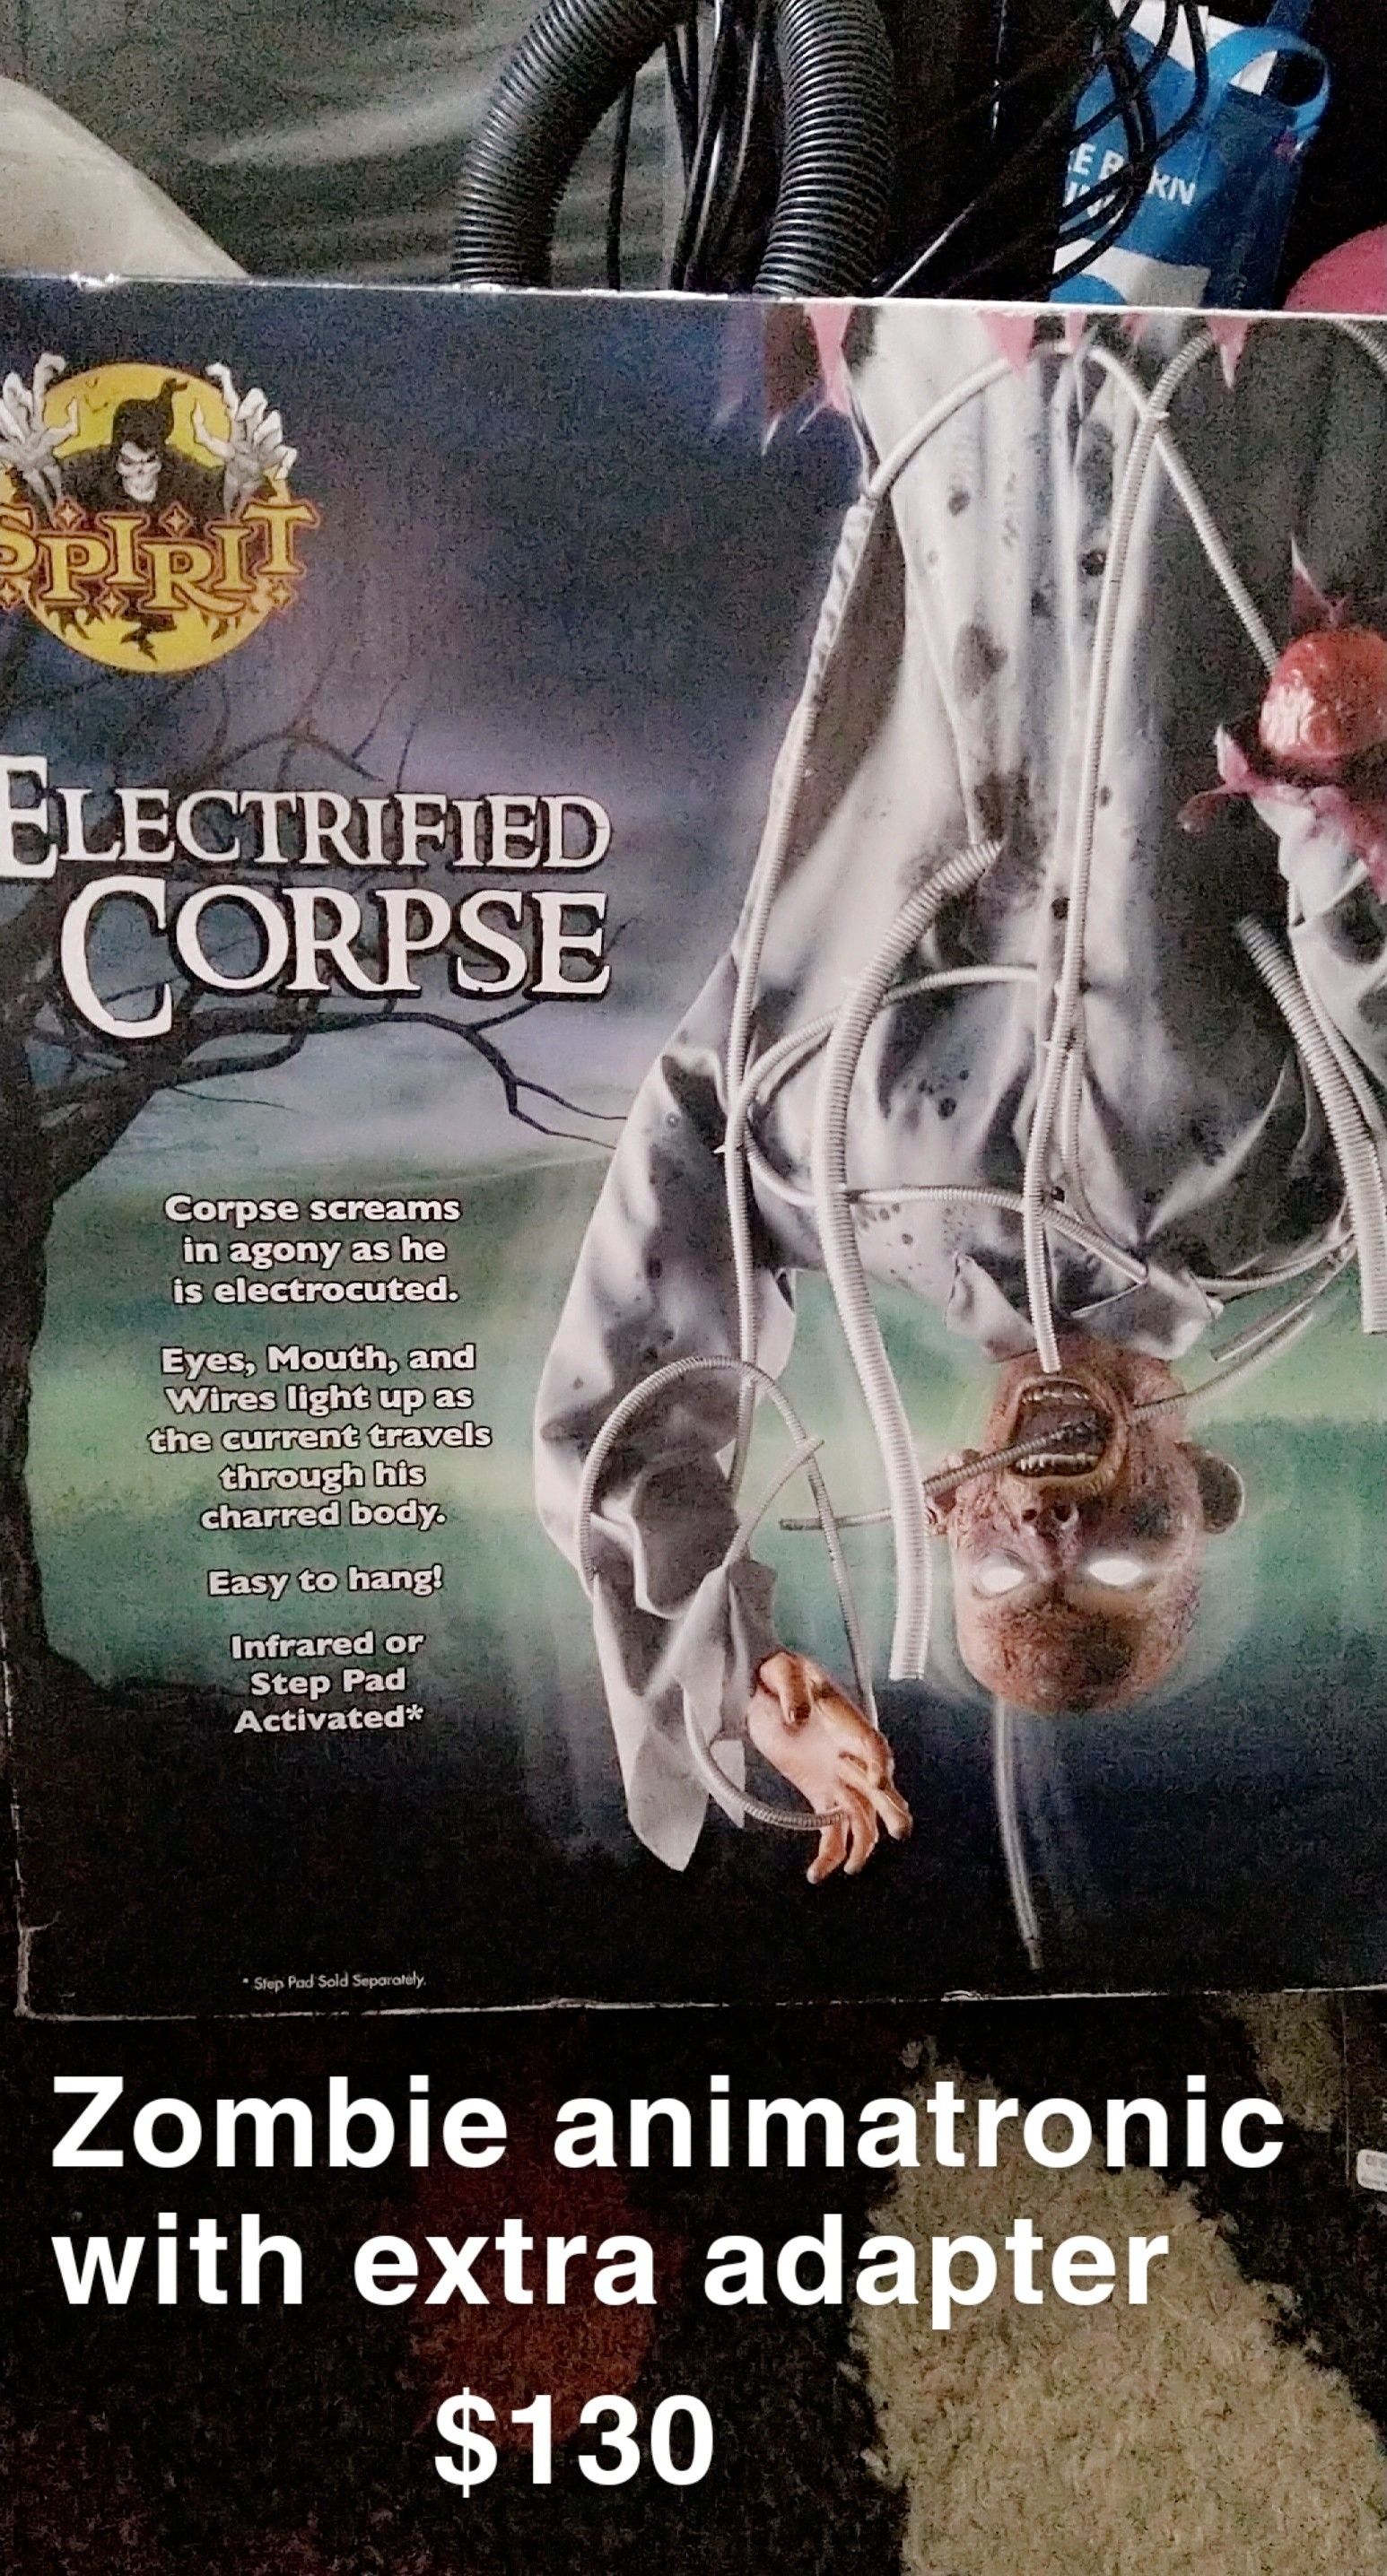 Electrified corpse